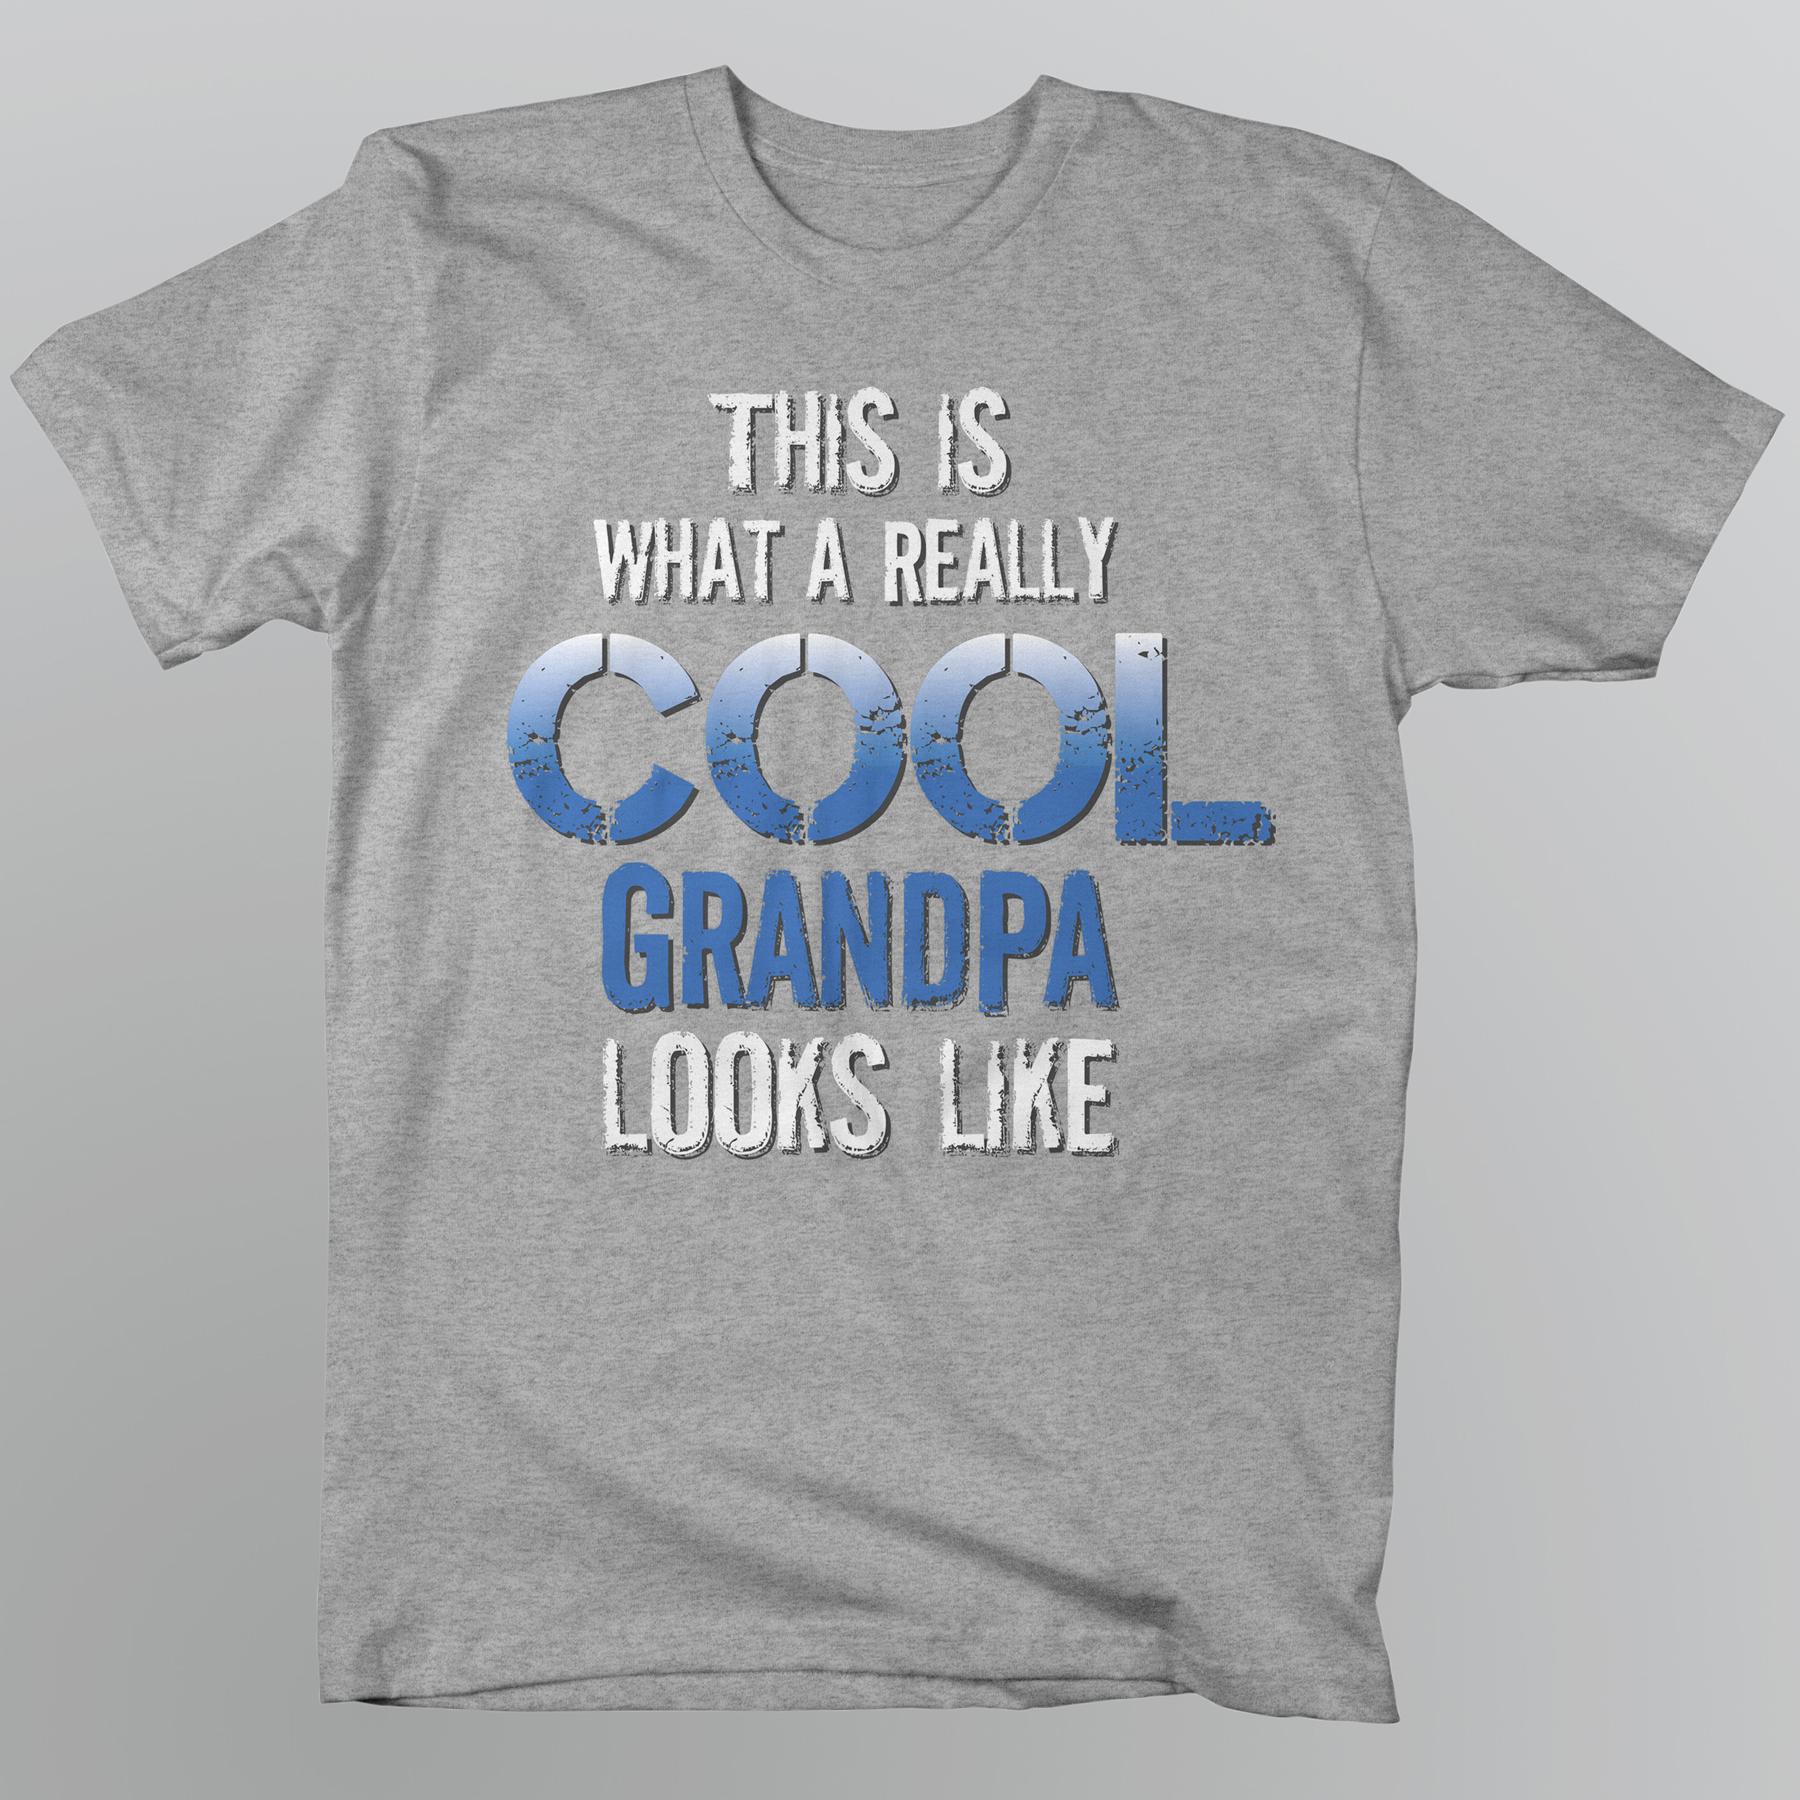 Ink Inc. Men's Graphic T-Shirt - Cool Grandpa